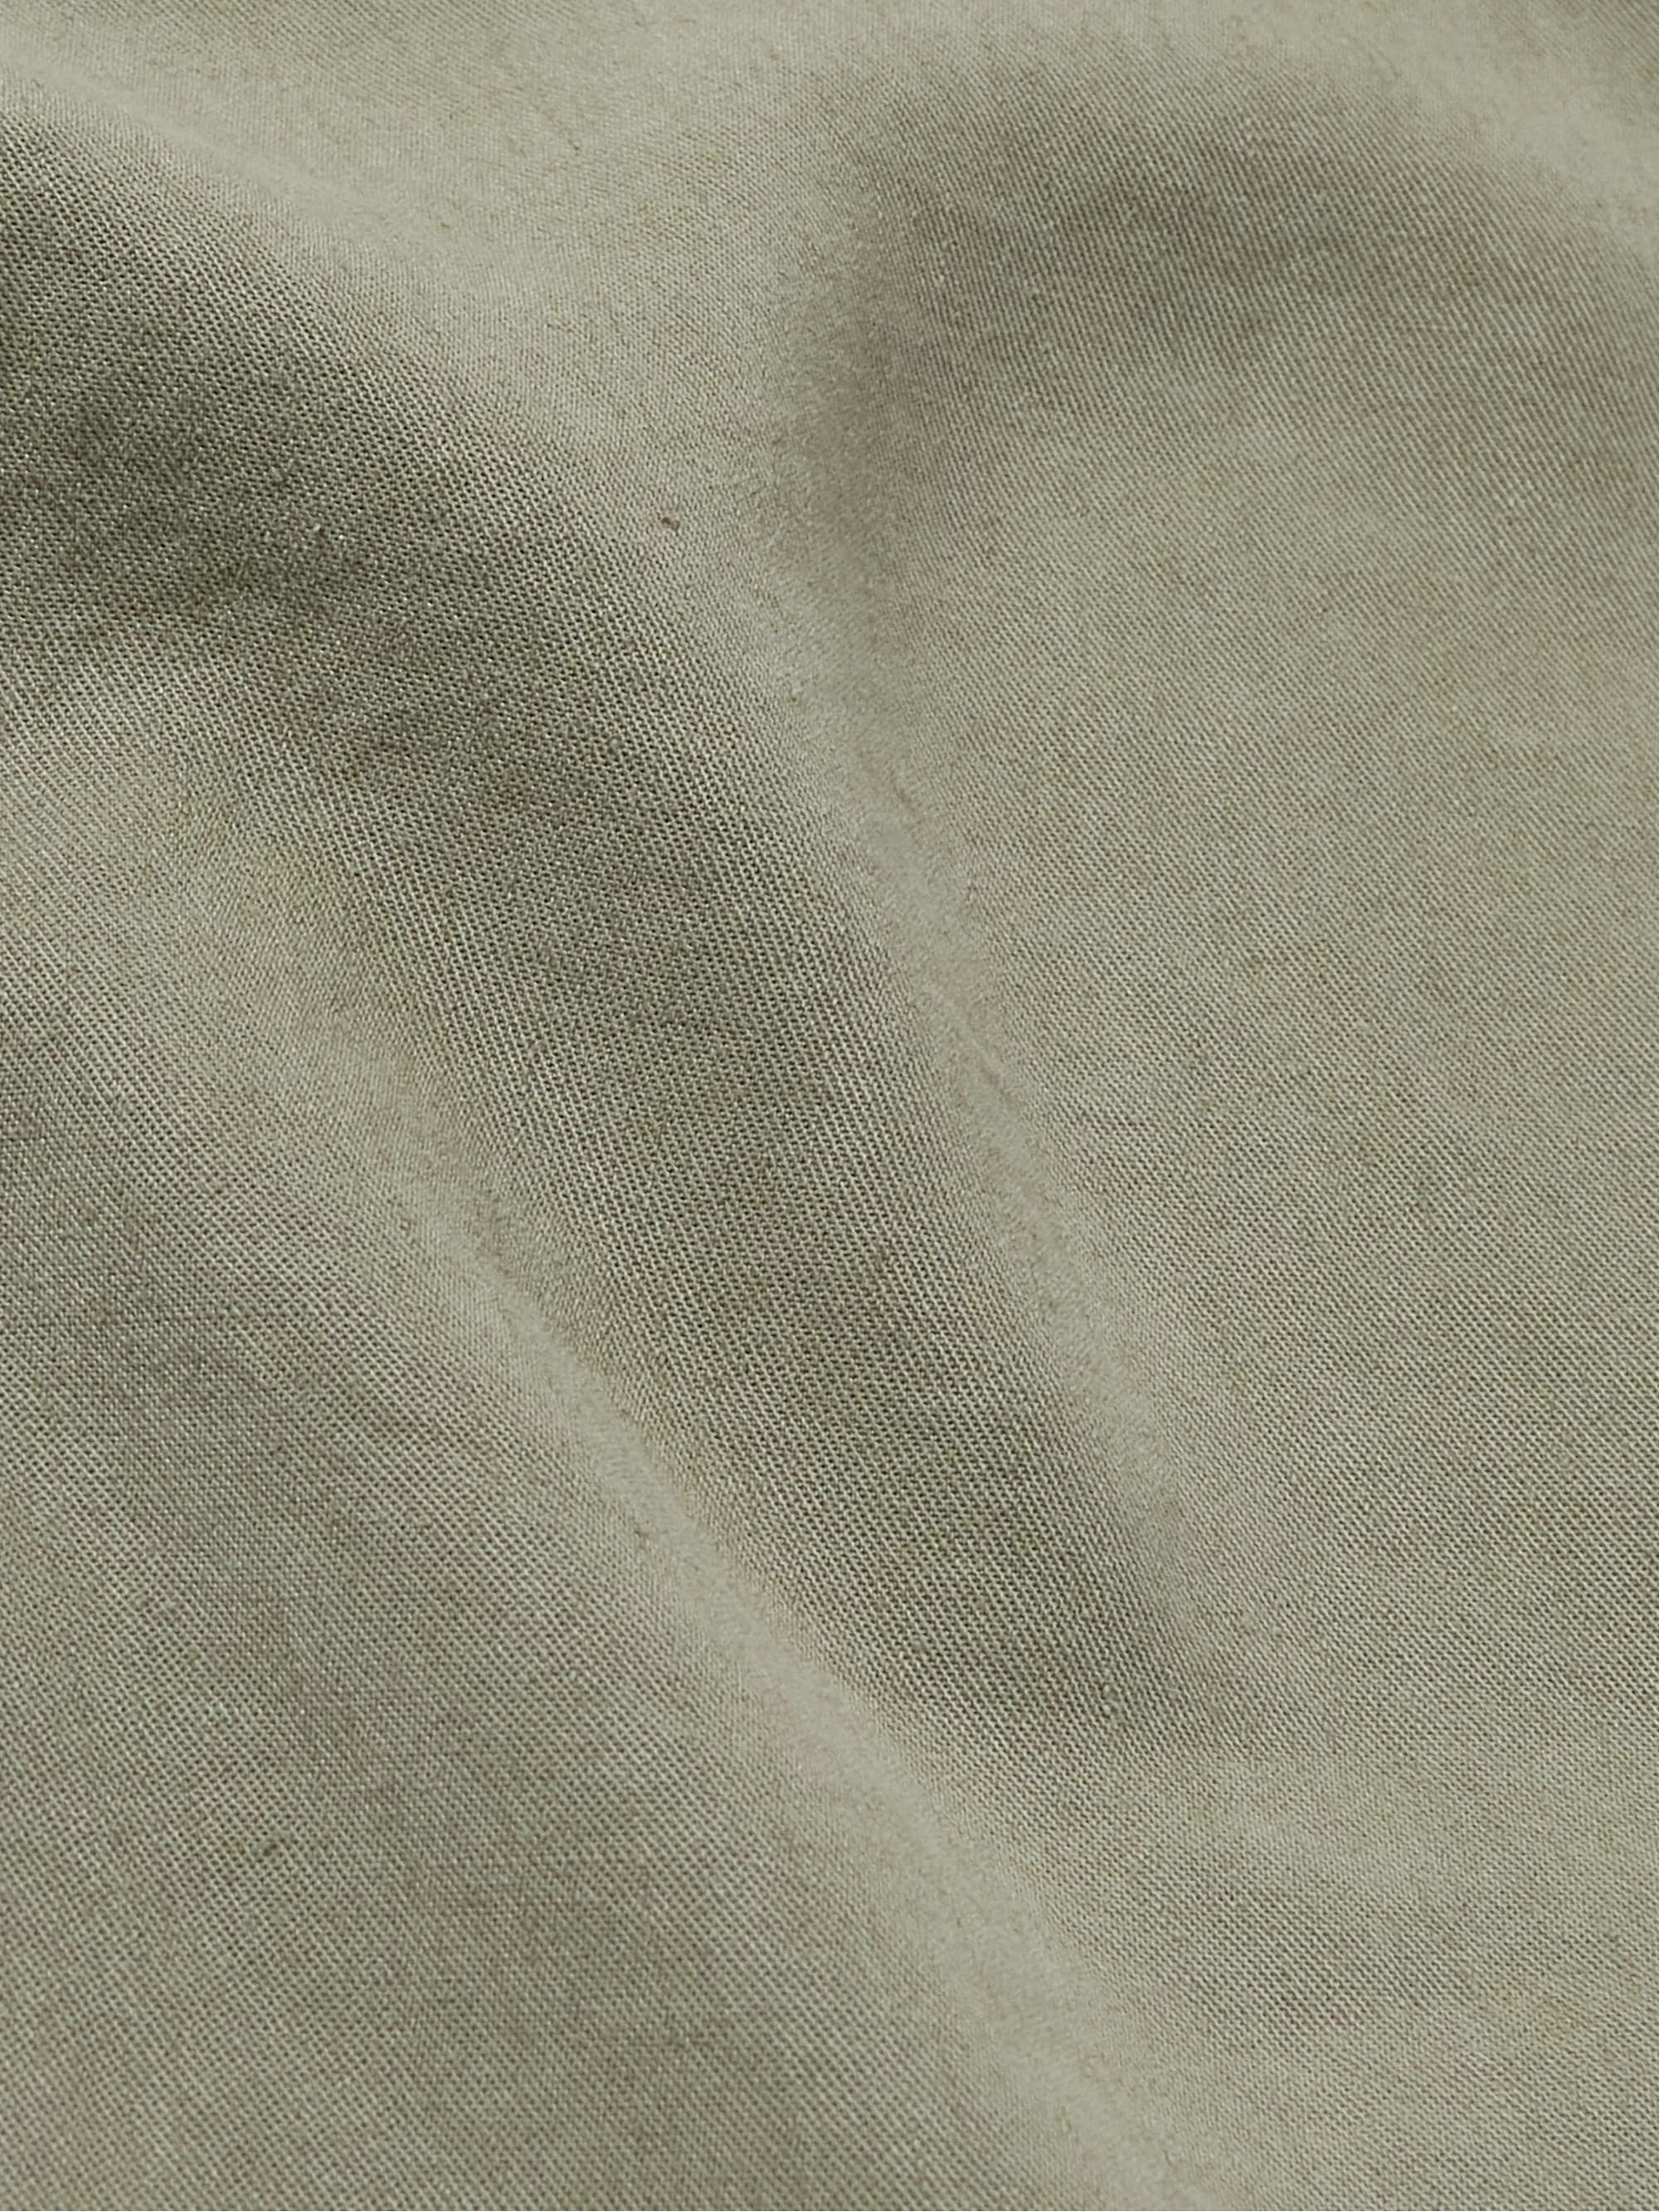 NN07 Miyagi Camp-Collar TENCEL Lyocell and Linen-Blend Shirt